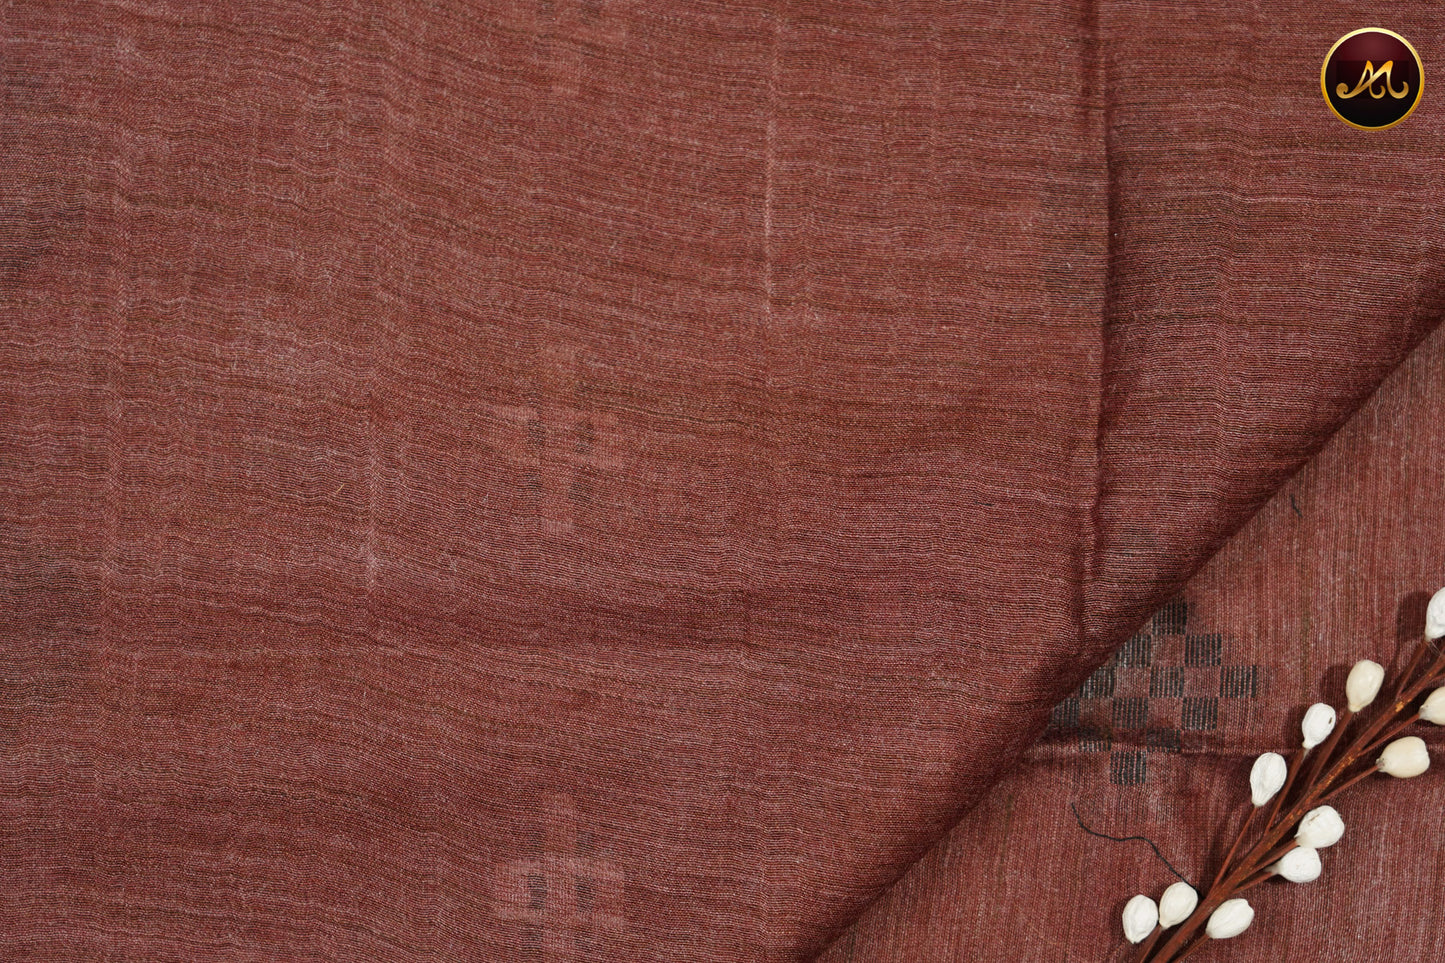 Bhagelpuri Cotton Saree in maroon colour with thread work butta